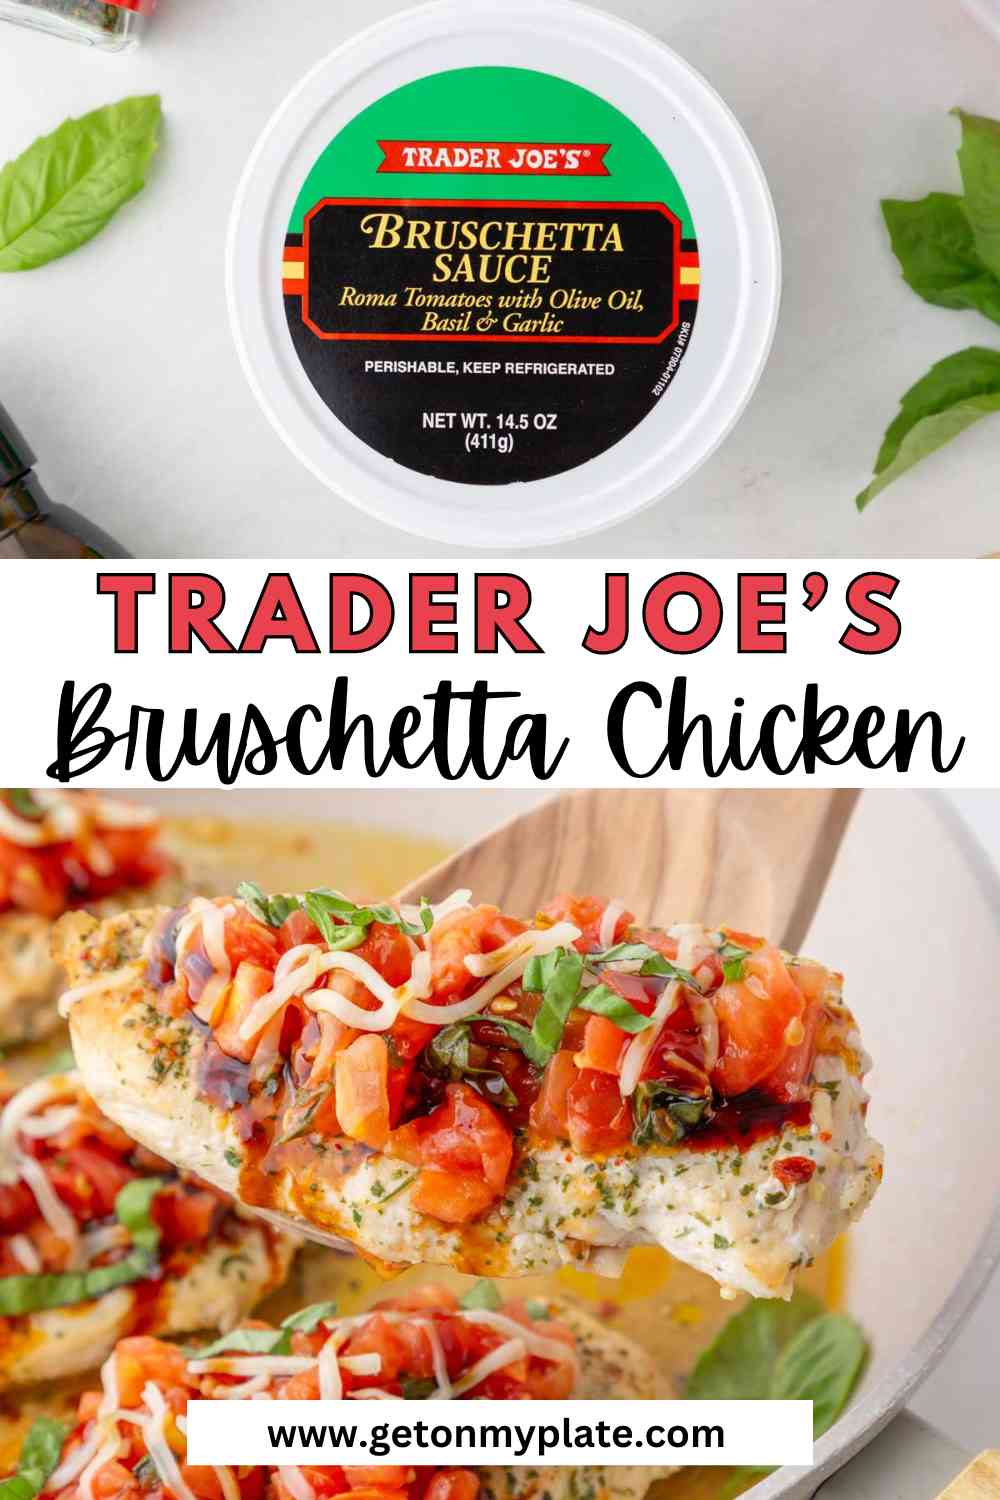 Pinterest Pin with Trader Joe's Bruschetta Sauce and Trader Joe's bruschetta chicken on a plate.